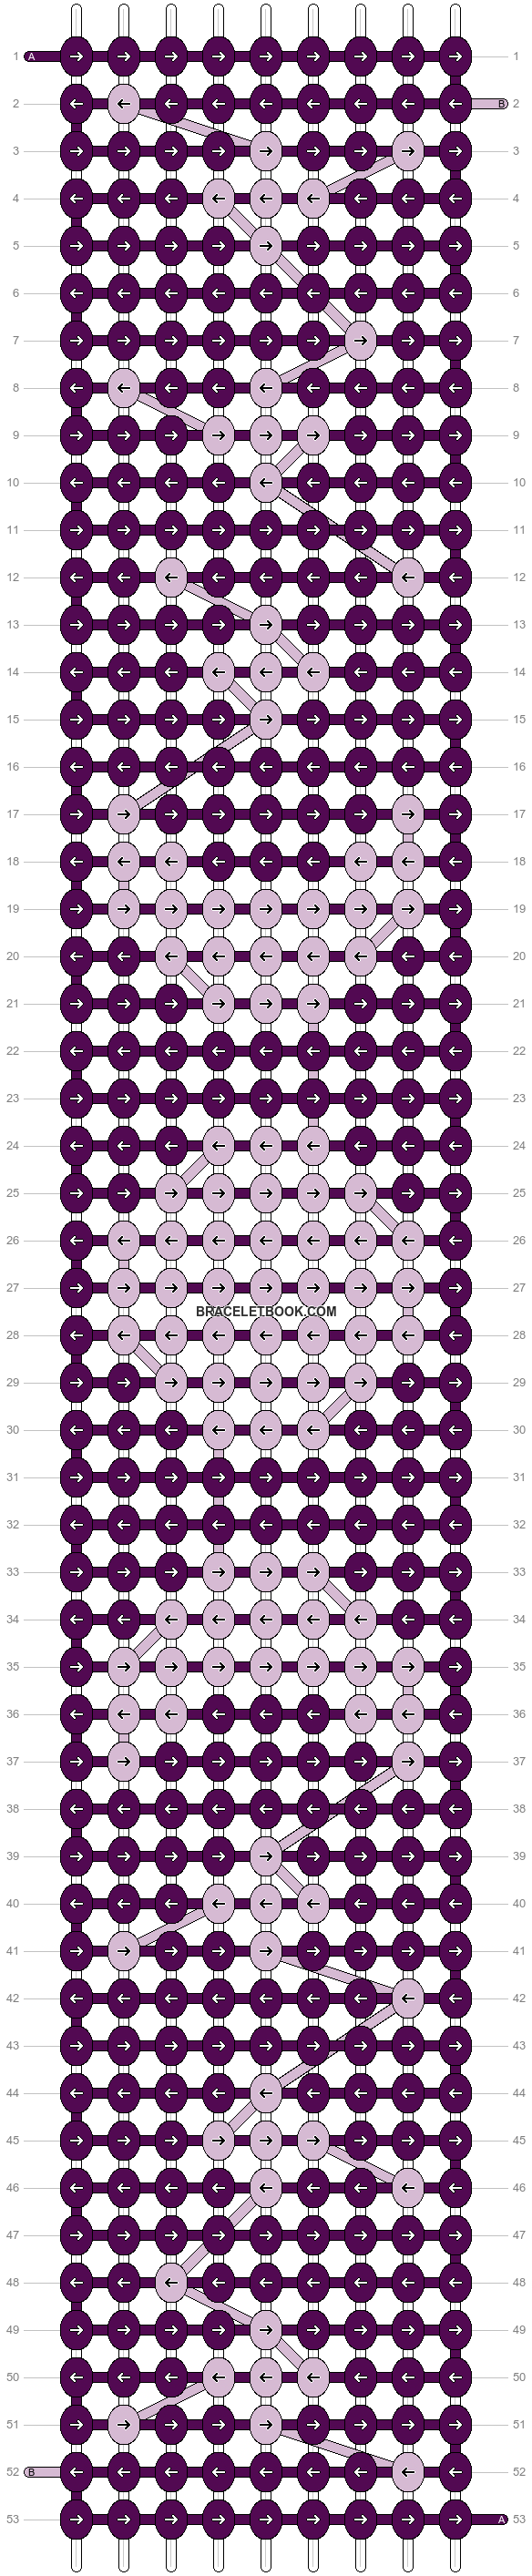 Alpha pattern #40067 variation #50021 pattern